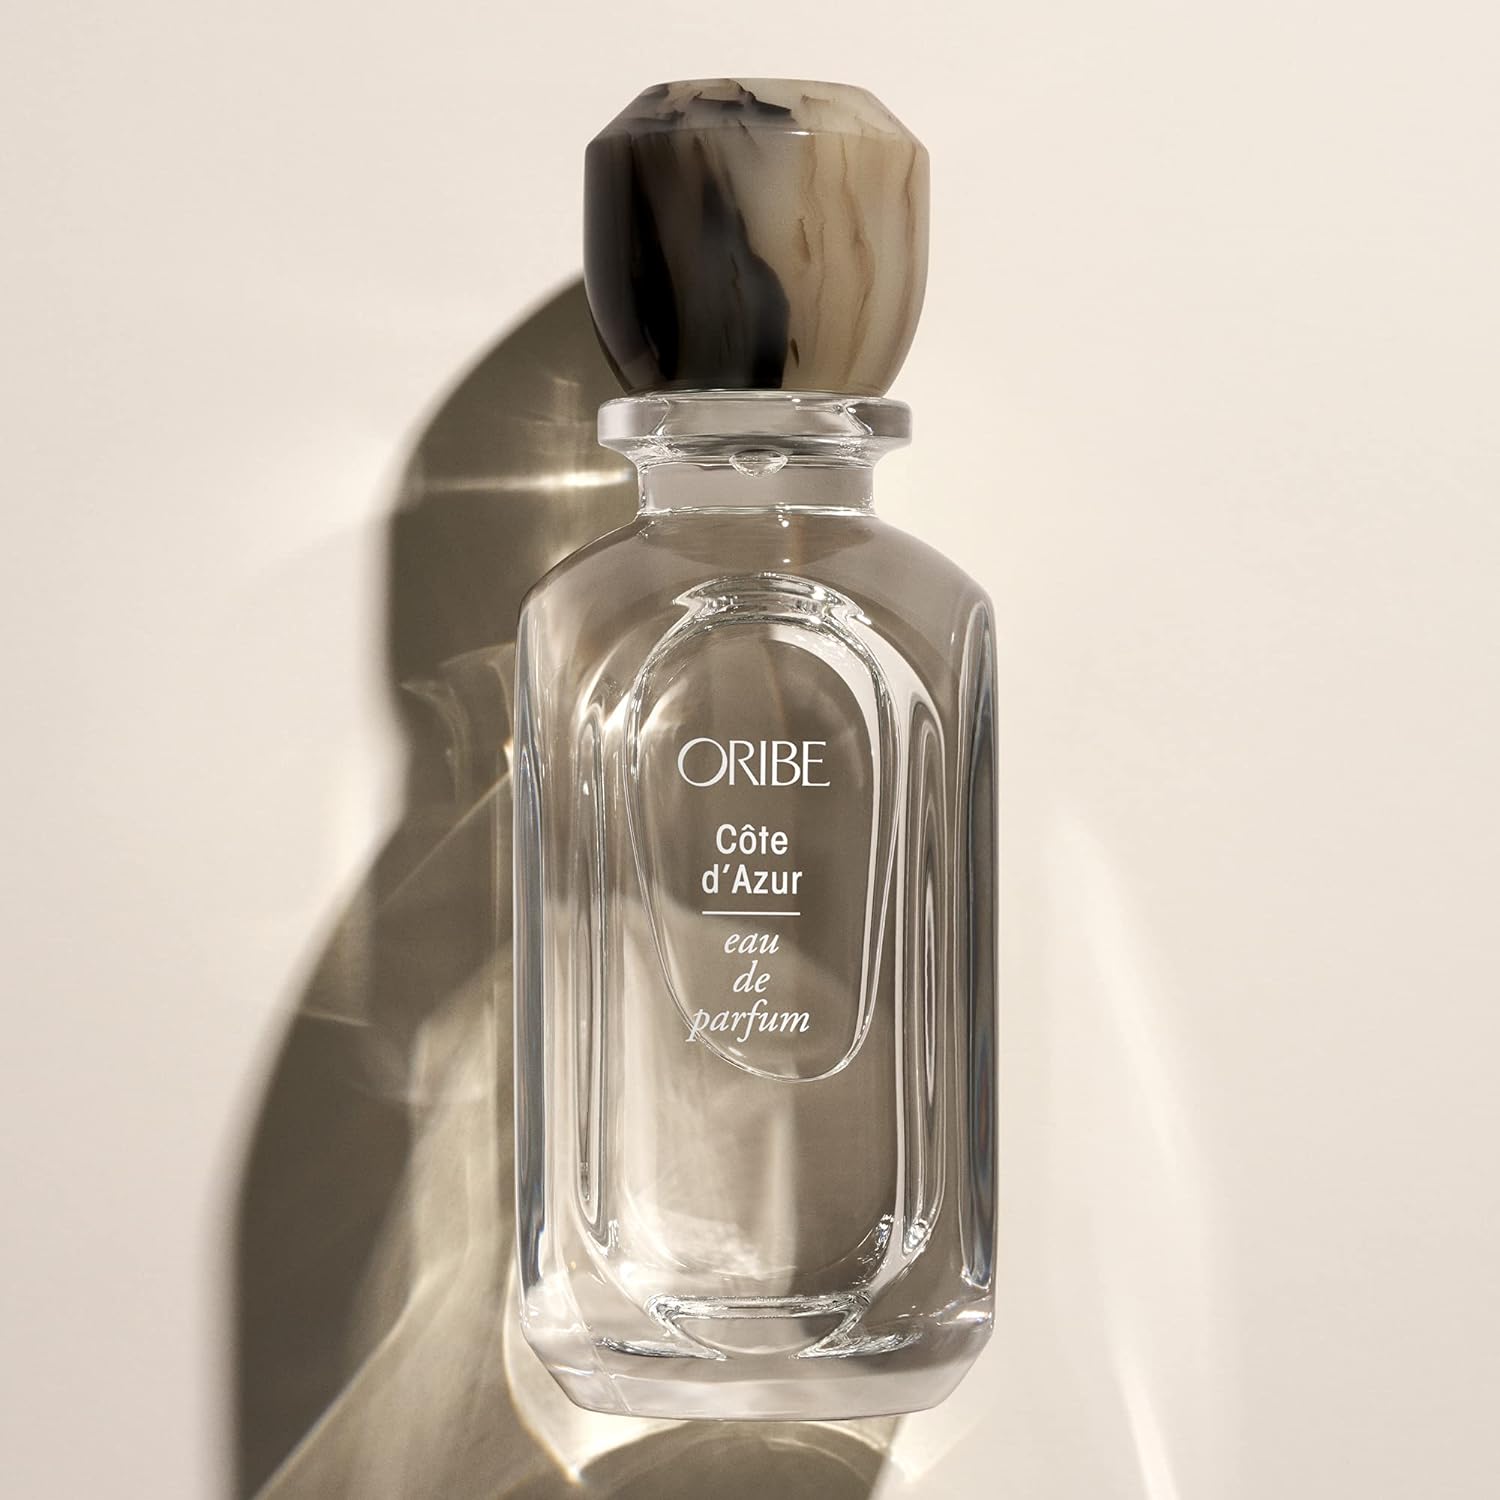 Buy ORIBE Cote d'Azur Eau de Parfum, 2.5 fl. oz. on Amazon.com ? FREE SHIPPING on qualified orders